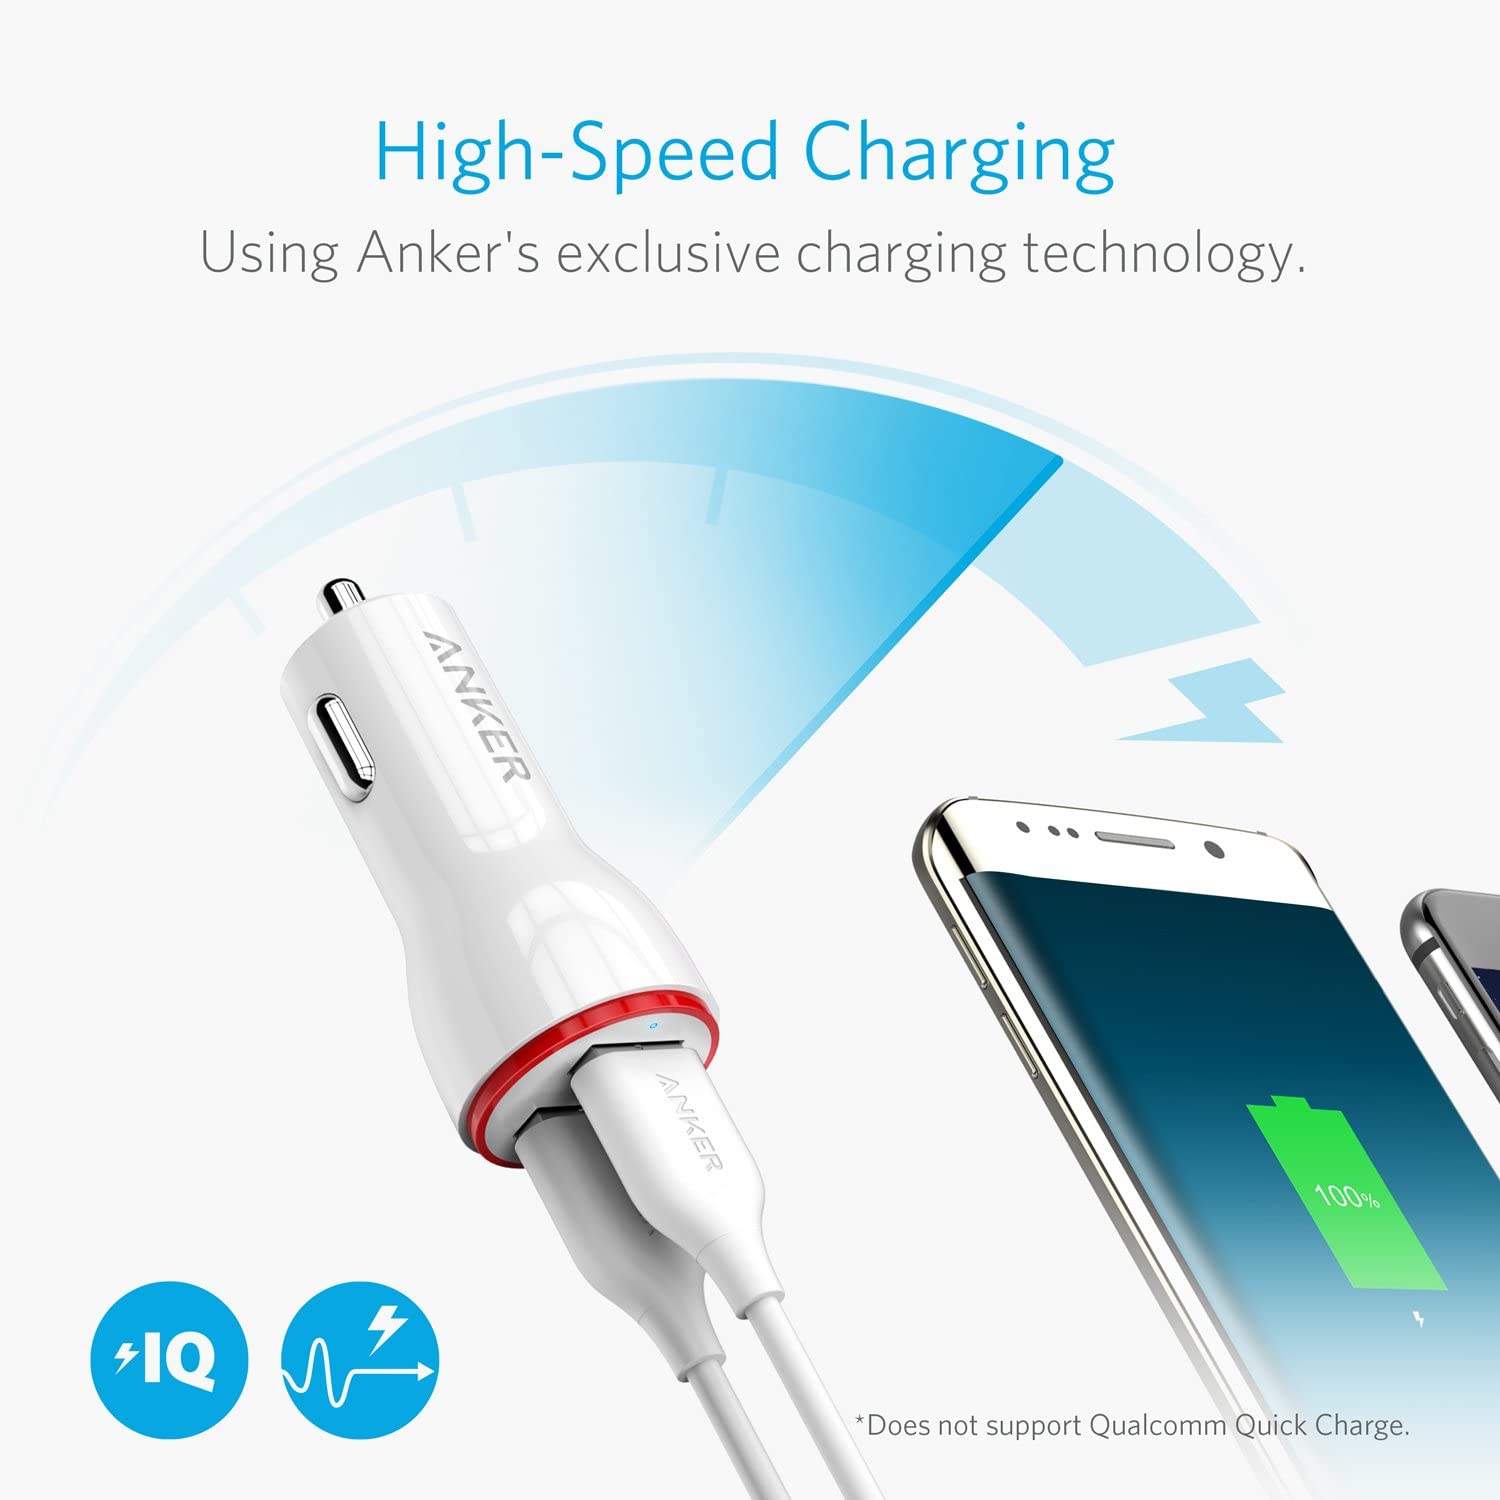 ANKER Car Charger PowerDrive 2 Ports USB 24W - white - Ajeeb